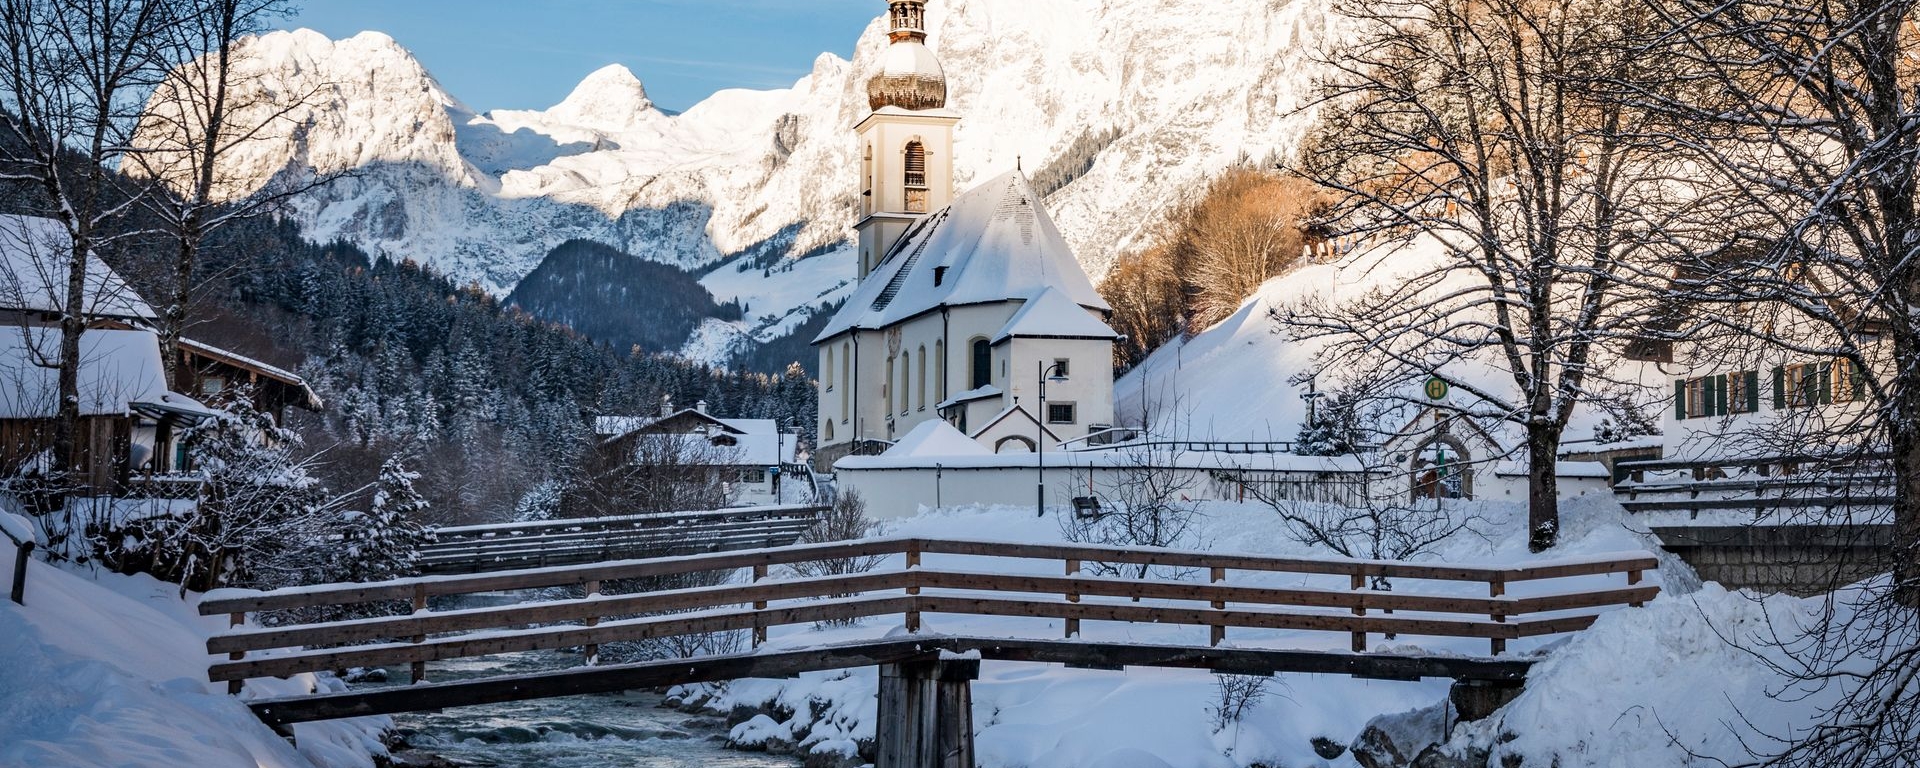 Berchtesgaden - Snowtours12